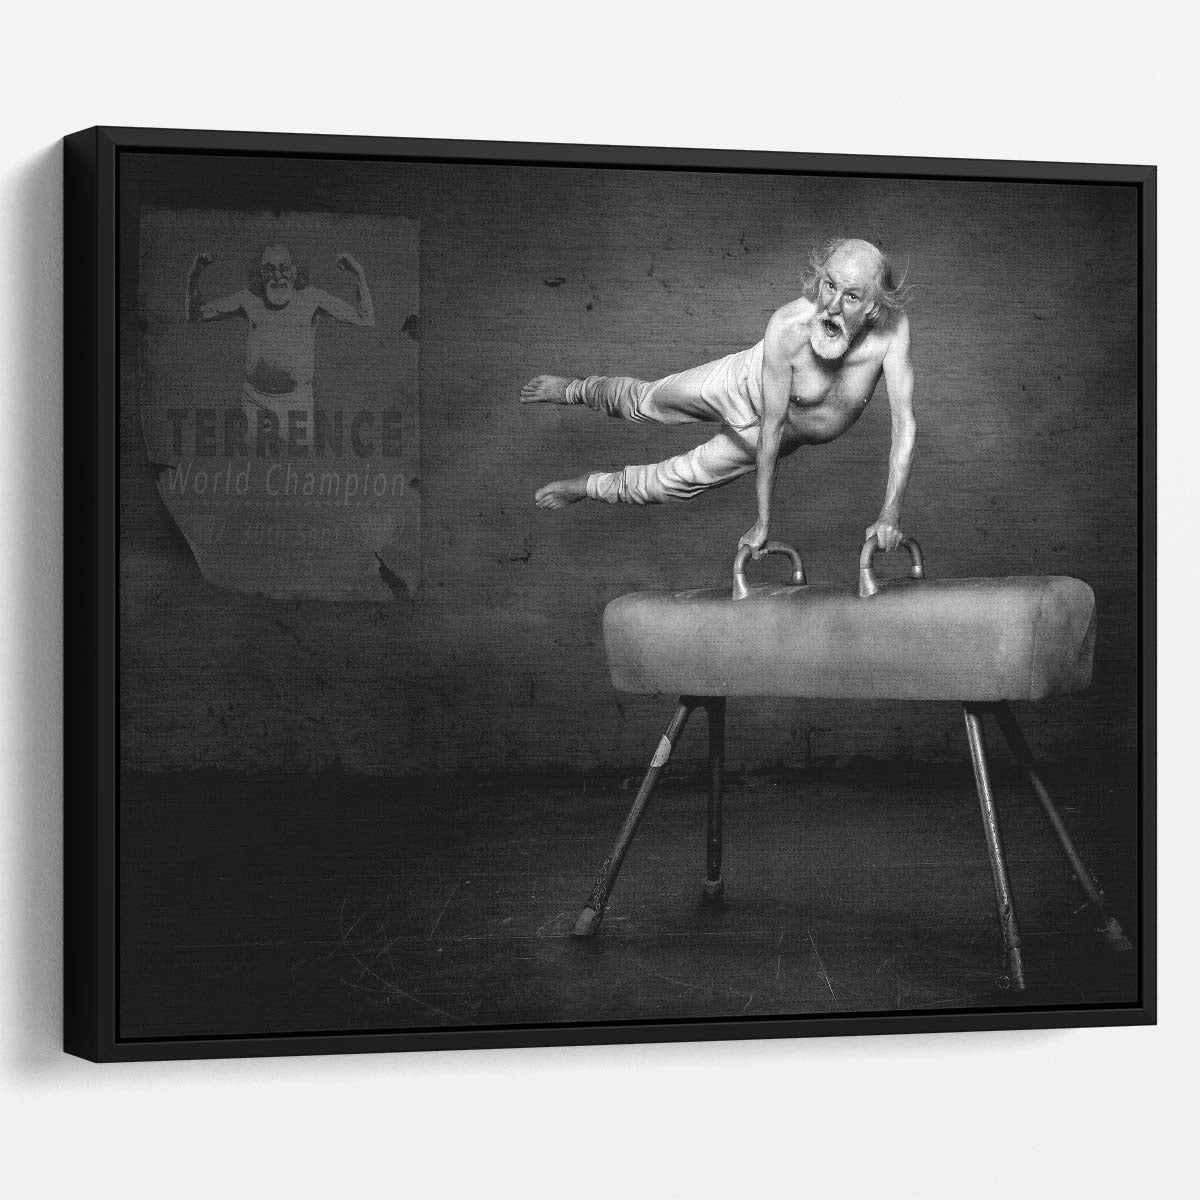 Speedy Senior Gymnast Humorous Monochrome Wall Art by Luxuriance Designs. Made in USA.